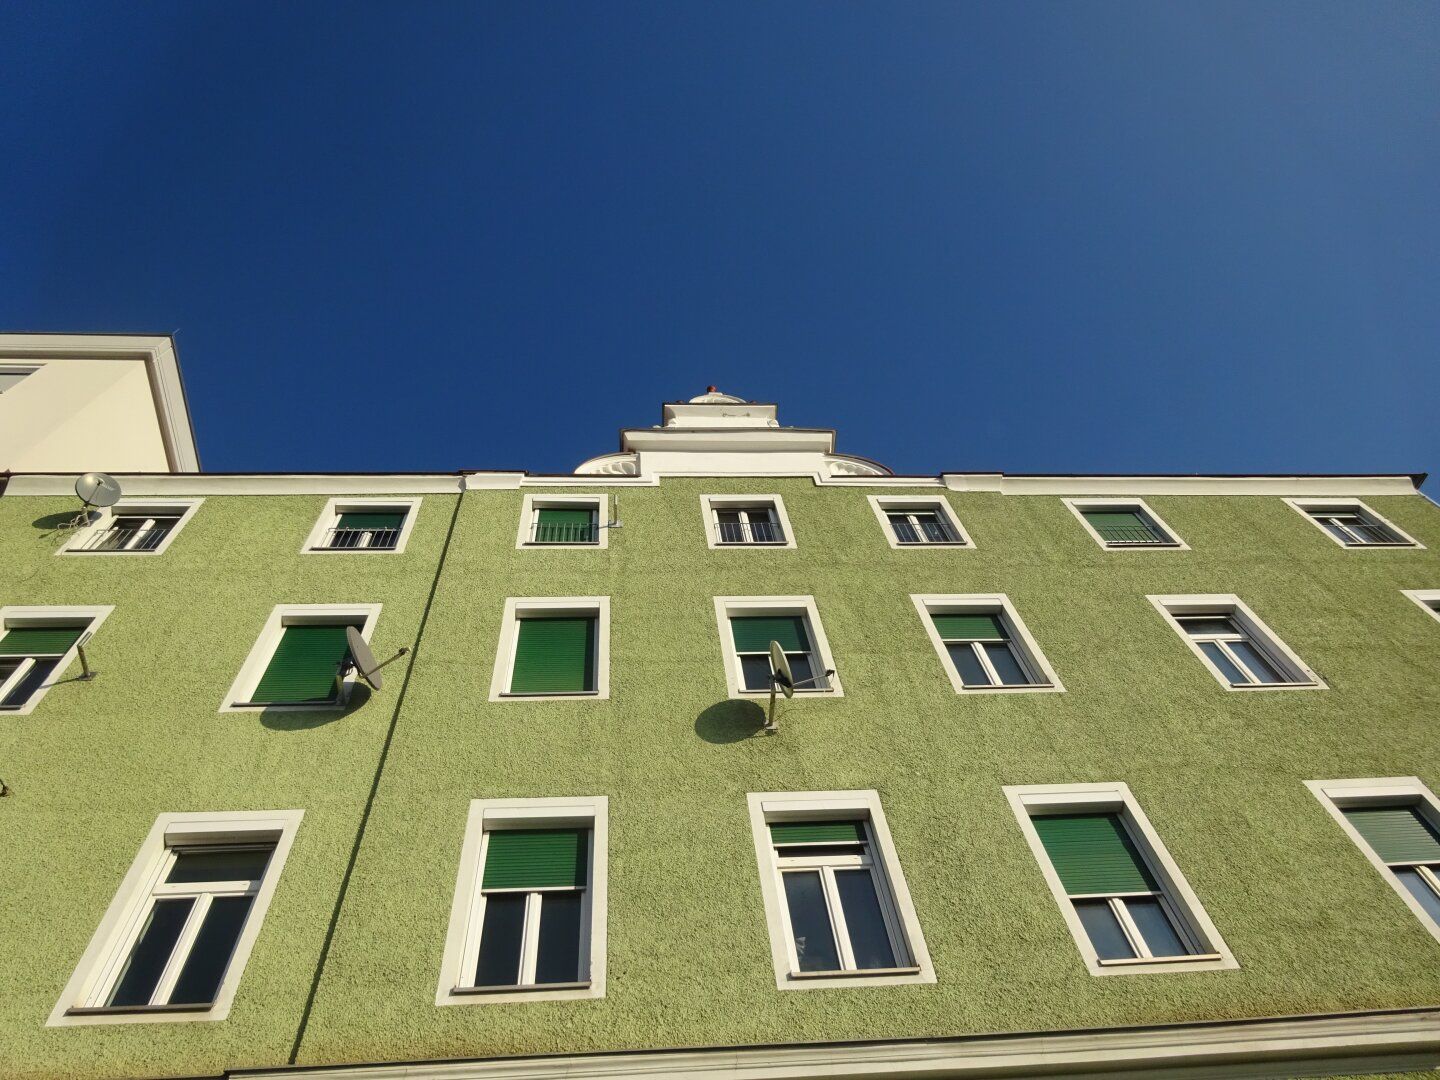 zentrale Stadtlage - Bestandsfreies 4-geschossiges Zinshaus mit Bau - und Projektreserve